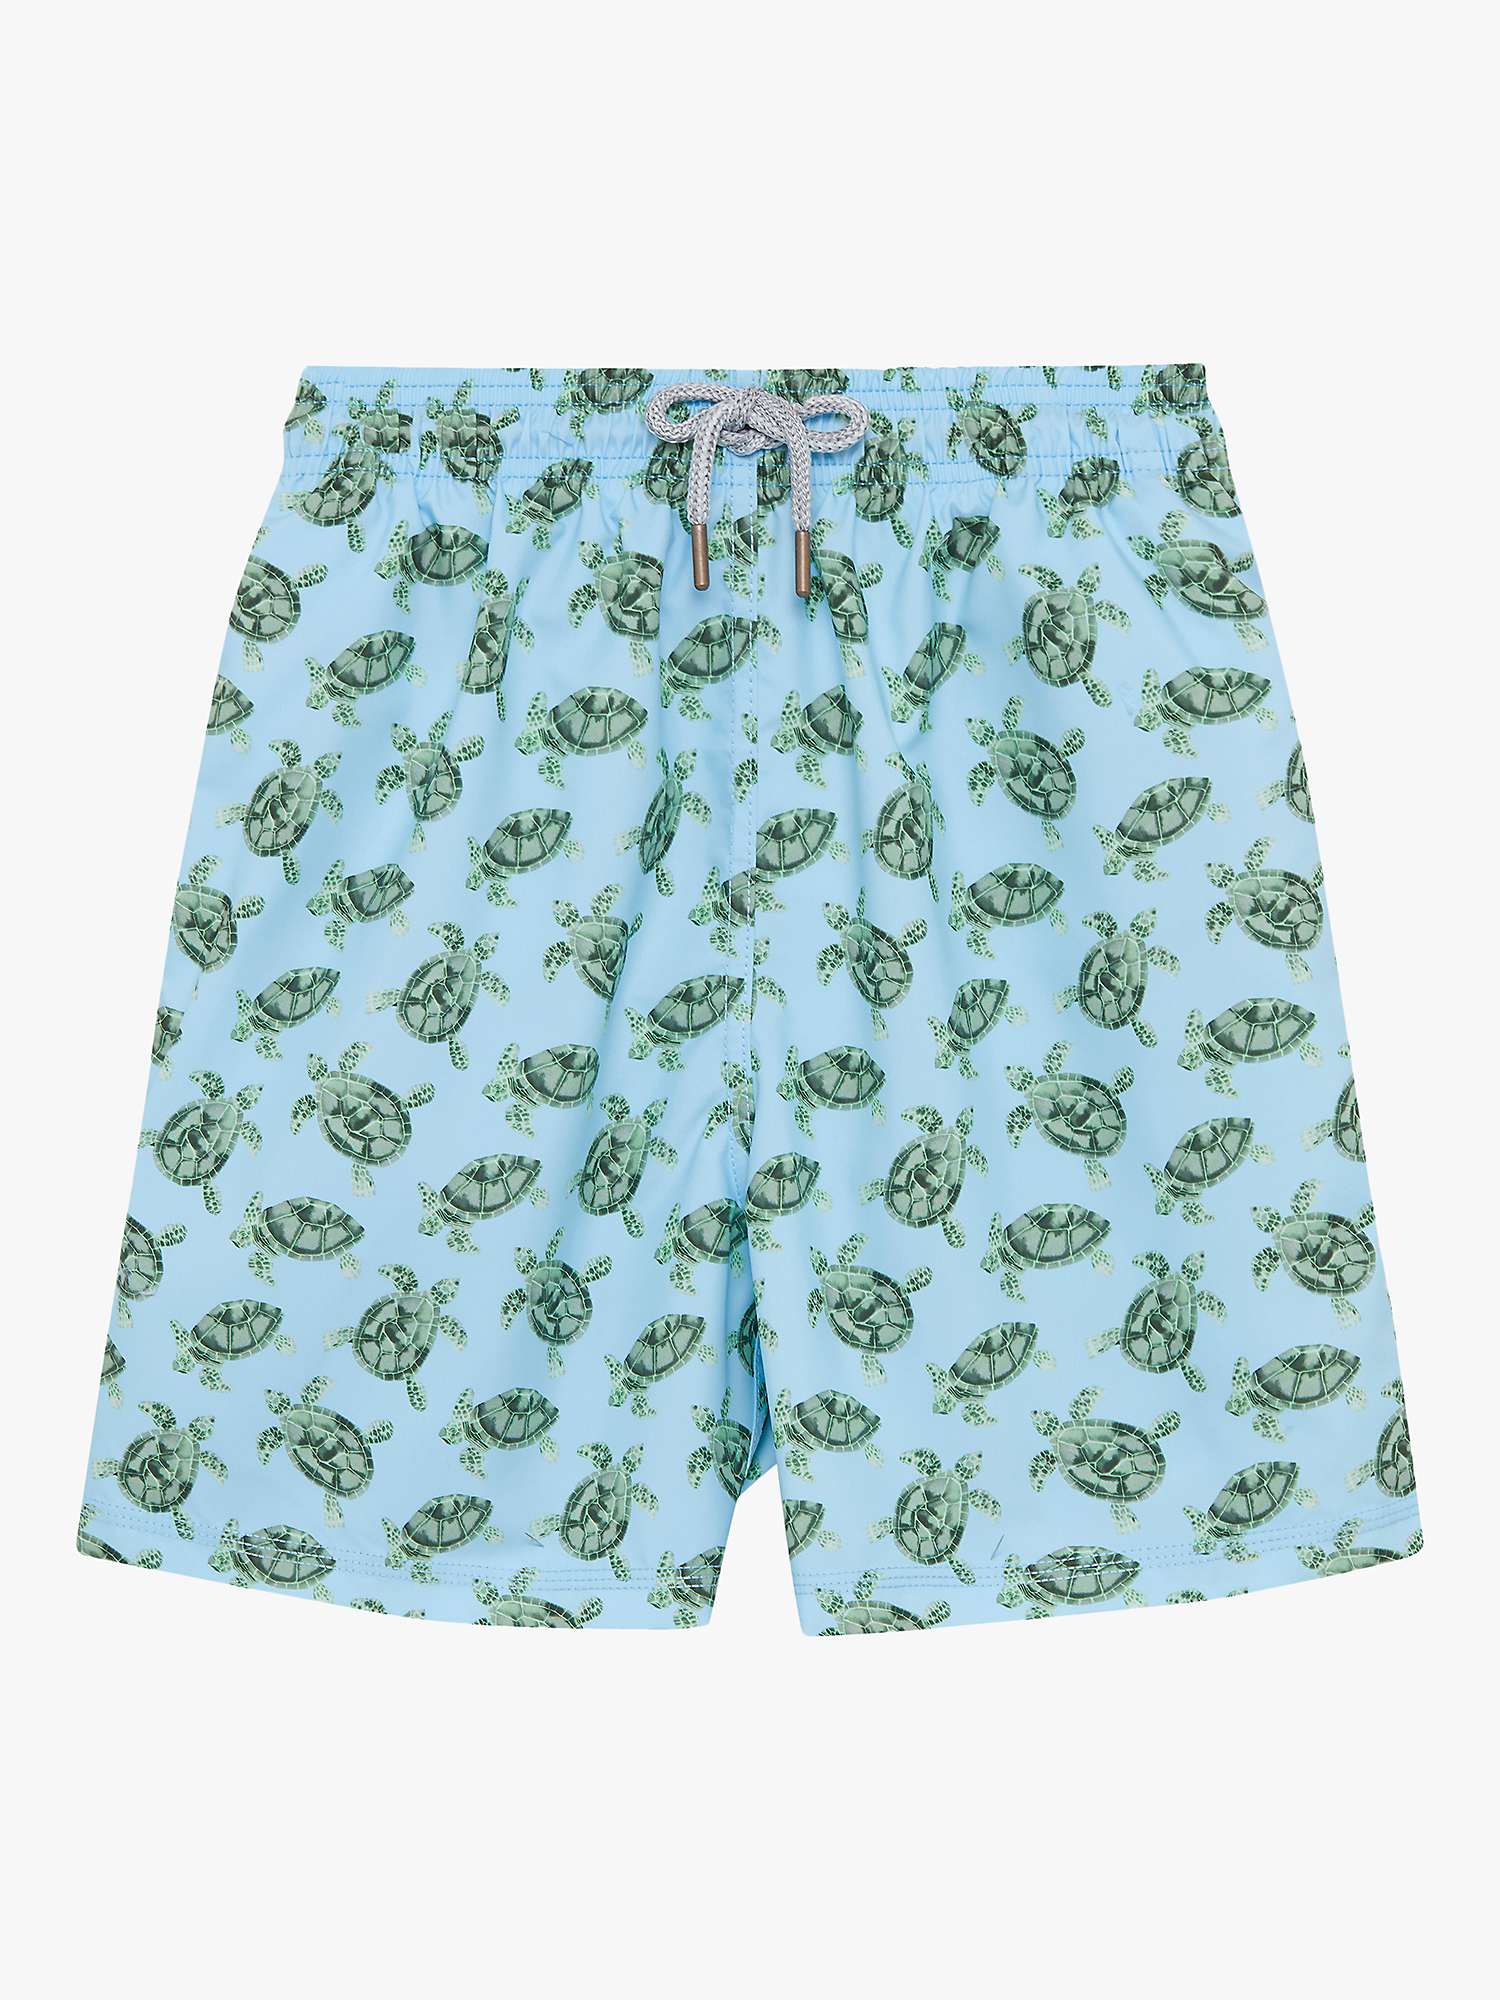 Buy Trotters Turtle Swim Shorts, Blue/Turtle Online at johnlewis.com